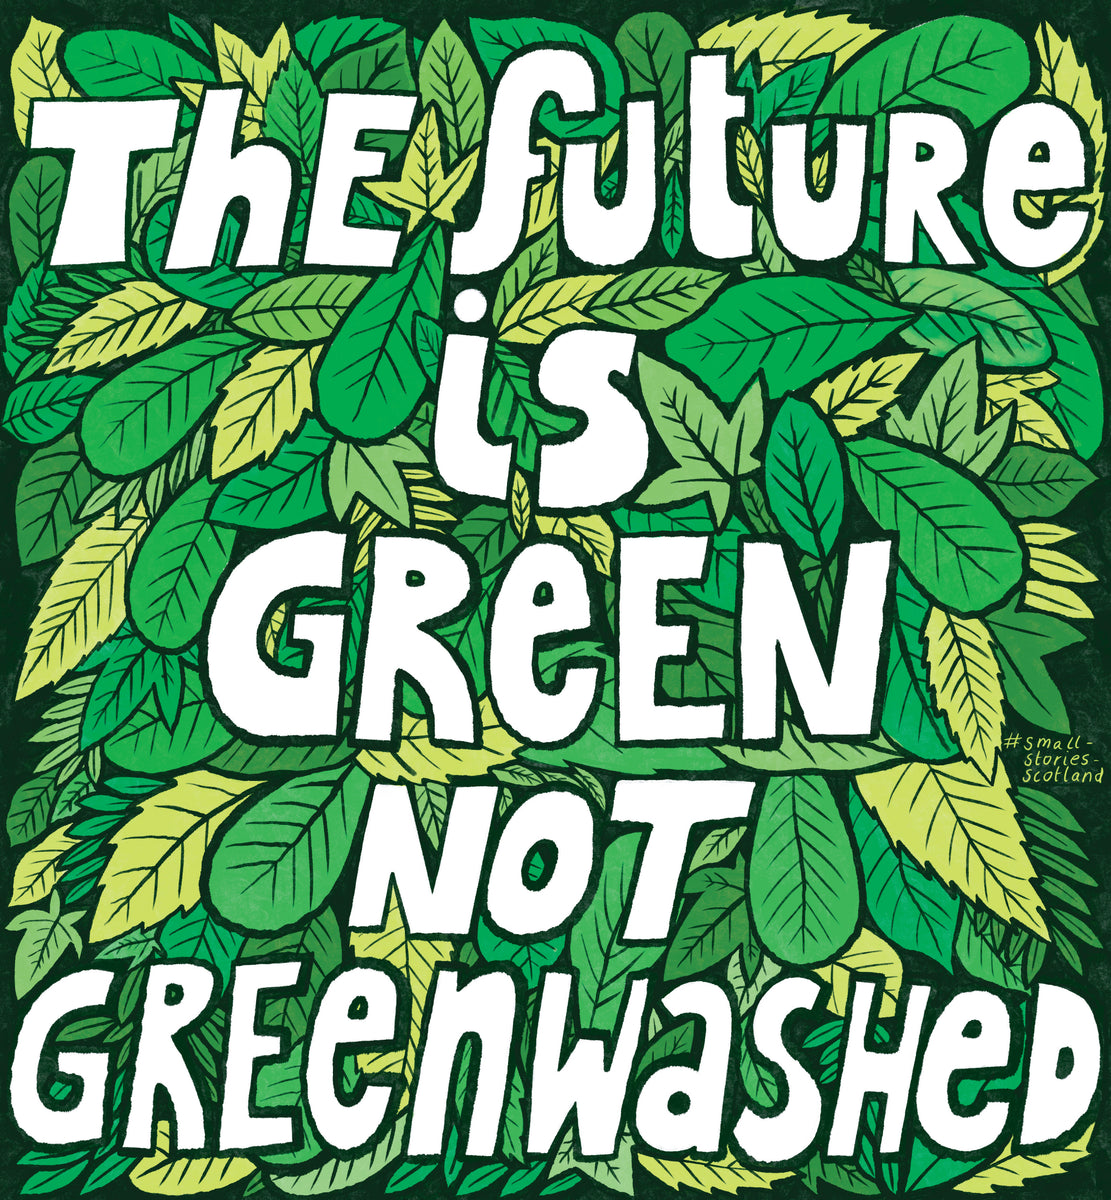 Greenwashing - Free Download – small-stories